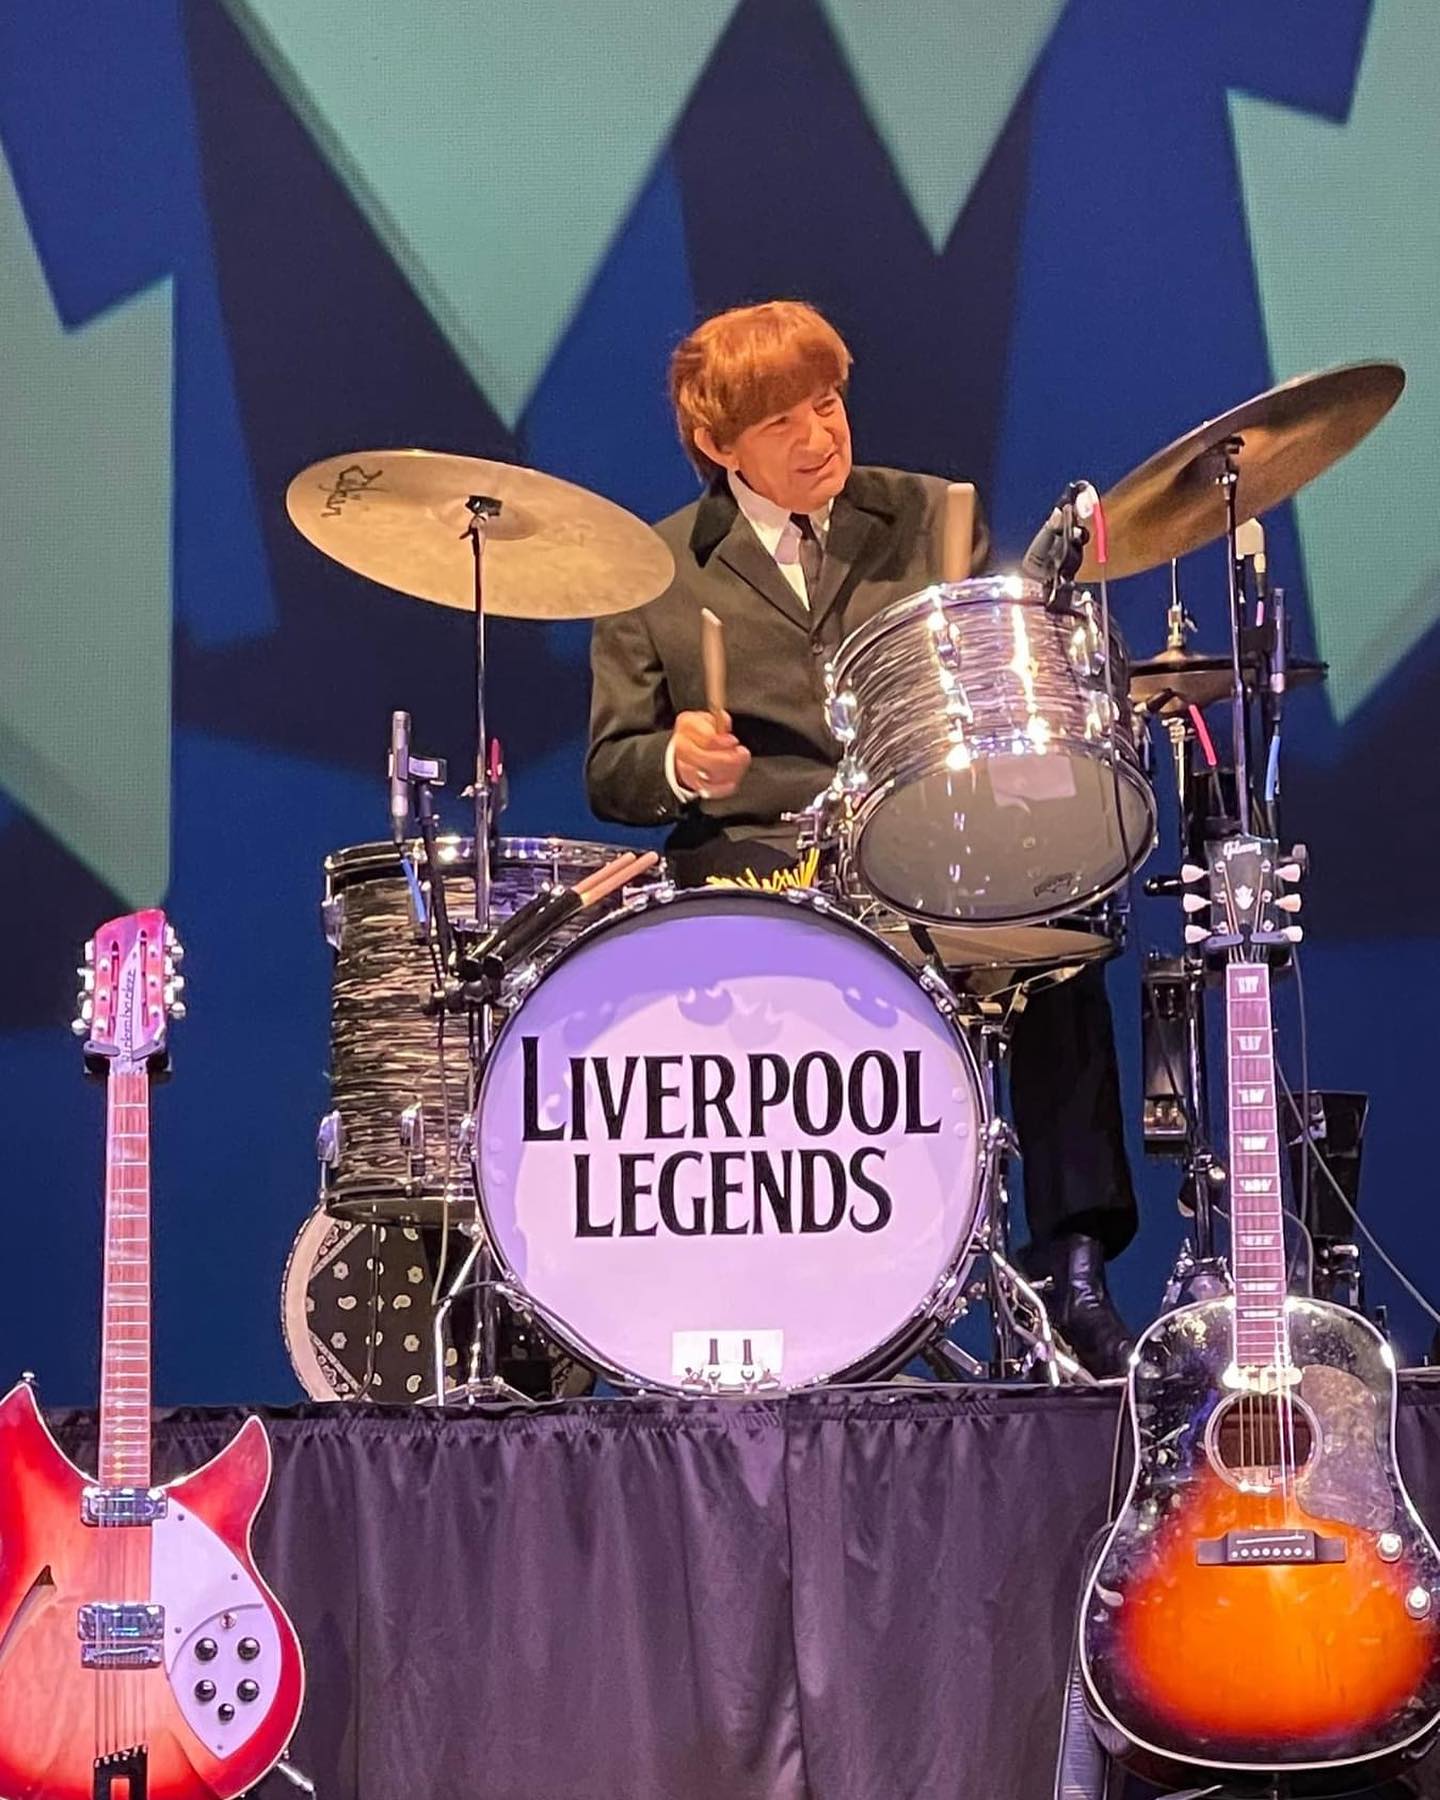 The Liverpool Legends Concert